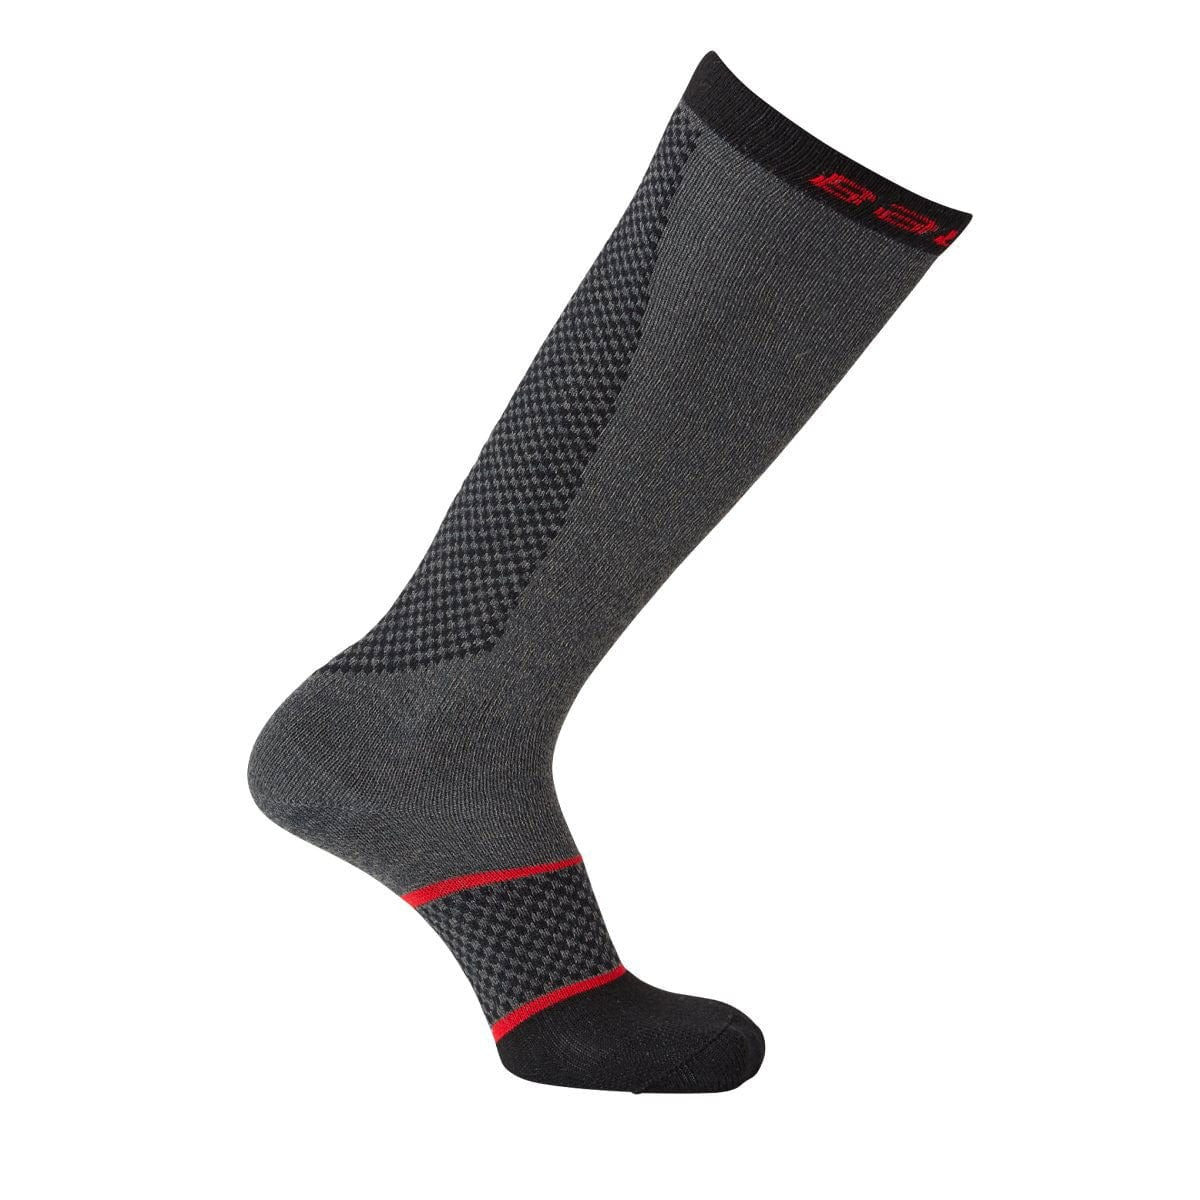 Bauer Pro Cut Resistant Skate Socks - Tall